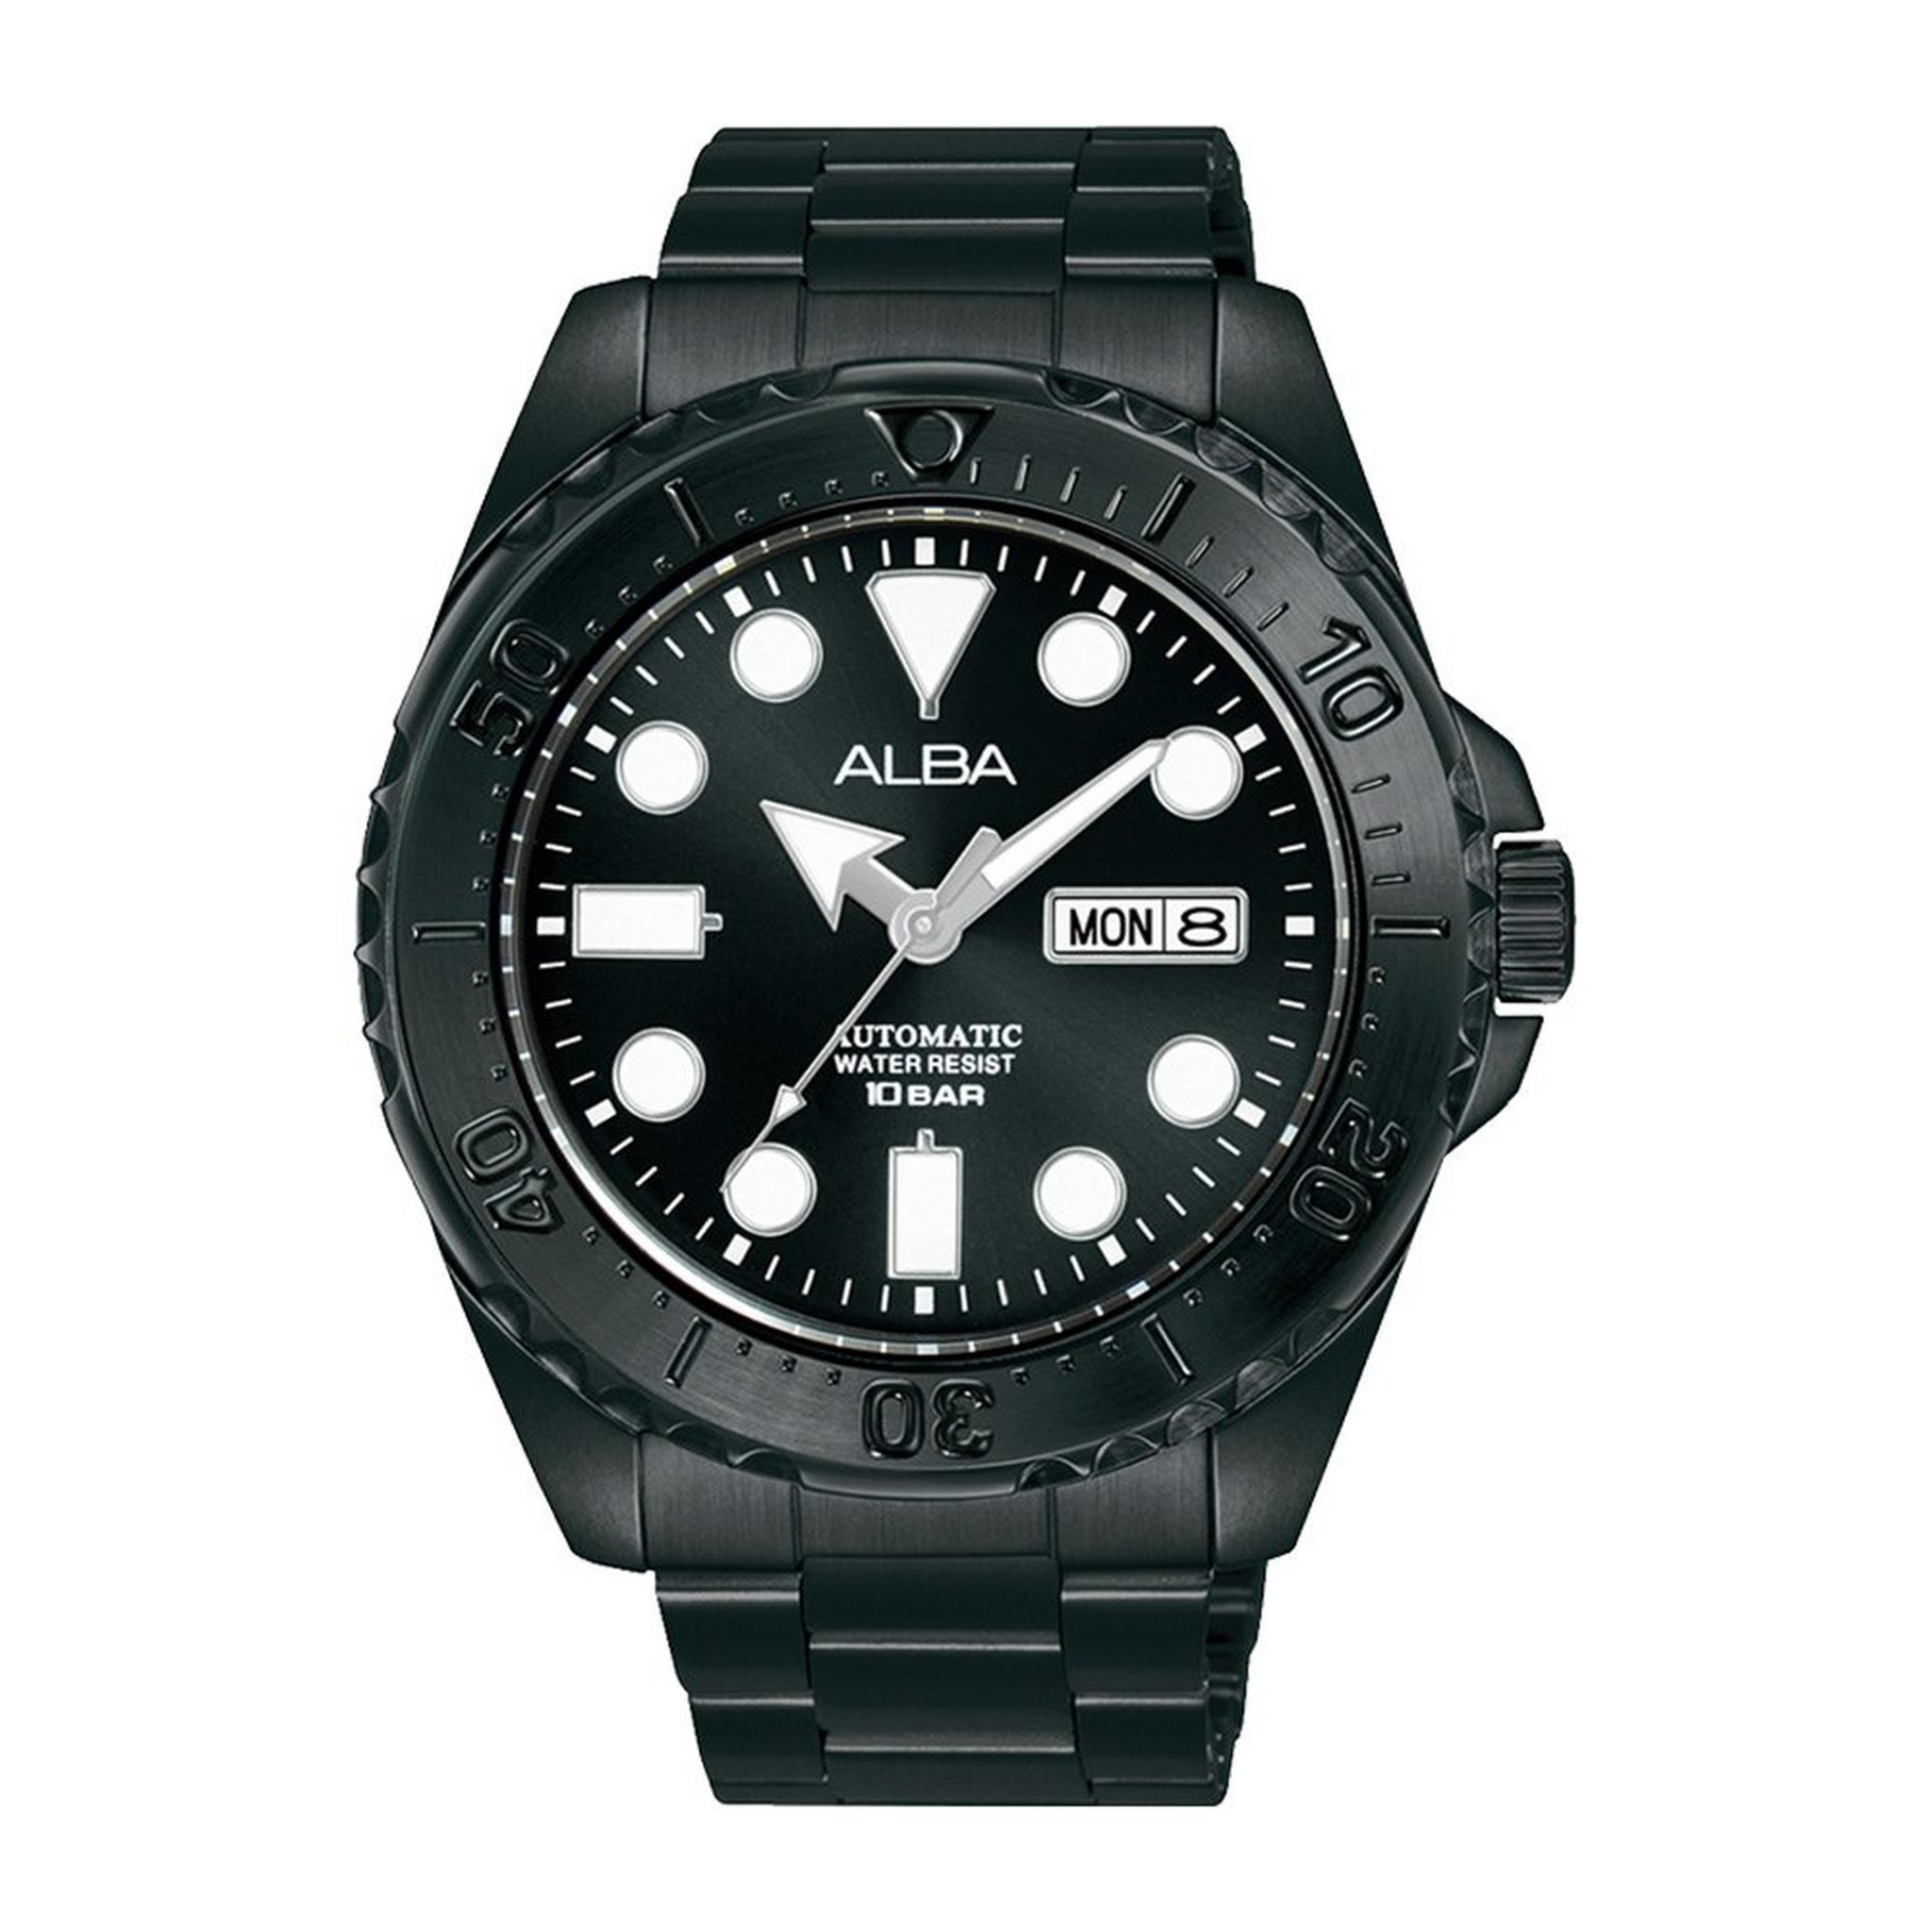 Alba Active Men's Watch,Analog, 44mm, Stainless Steel Strap, AL4483X1 - Black